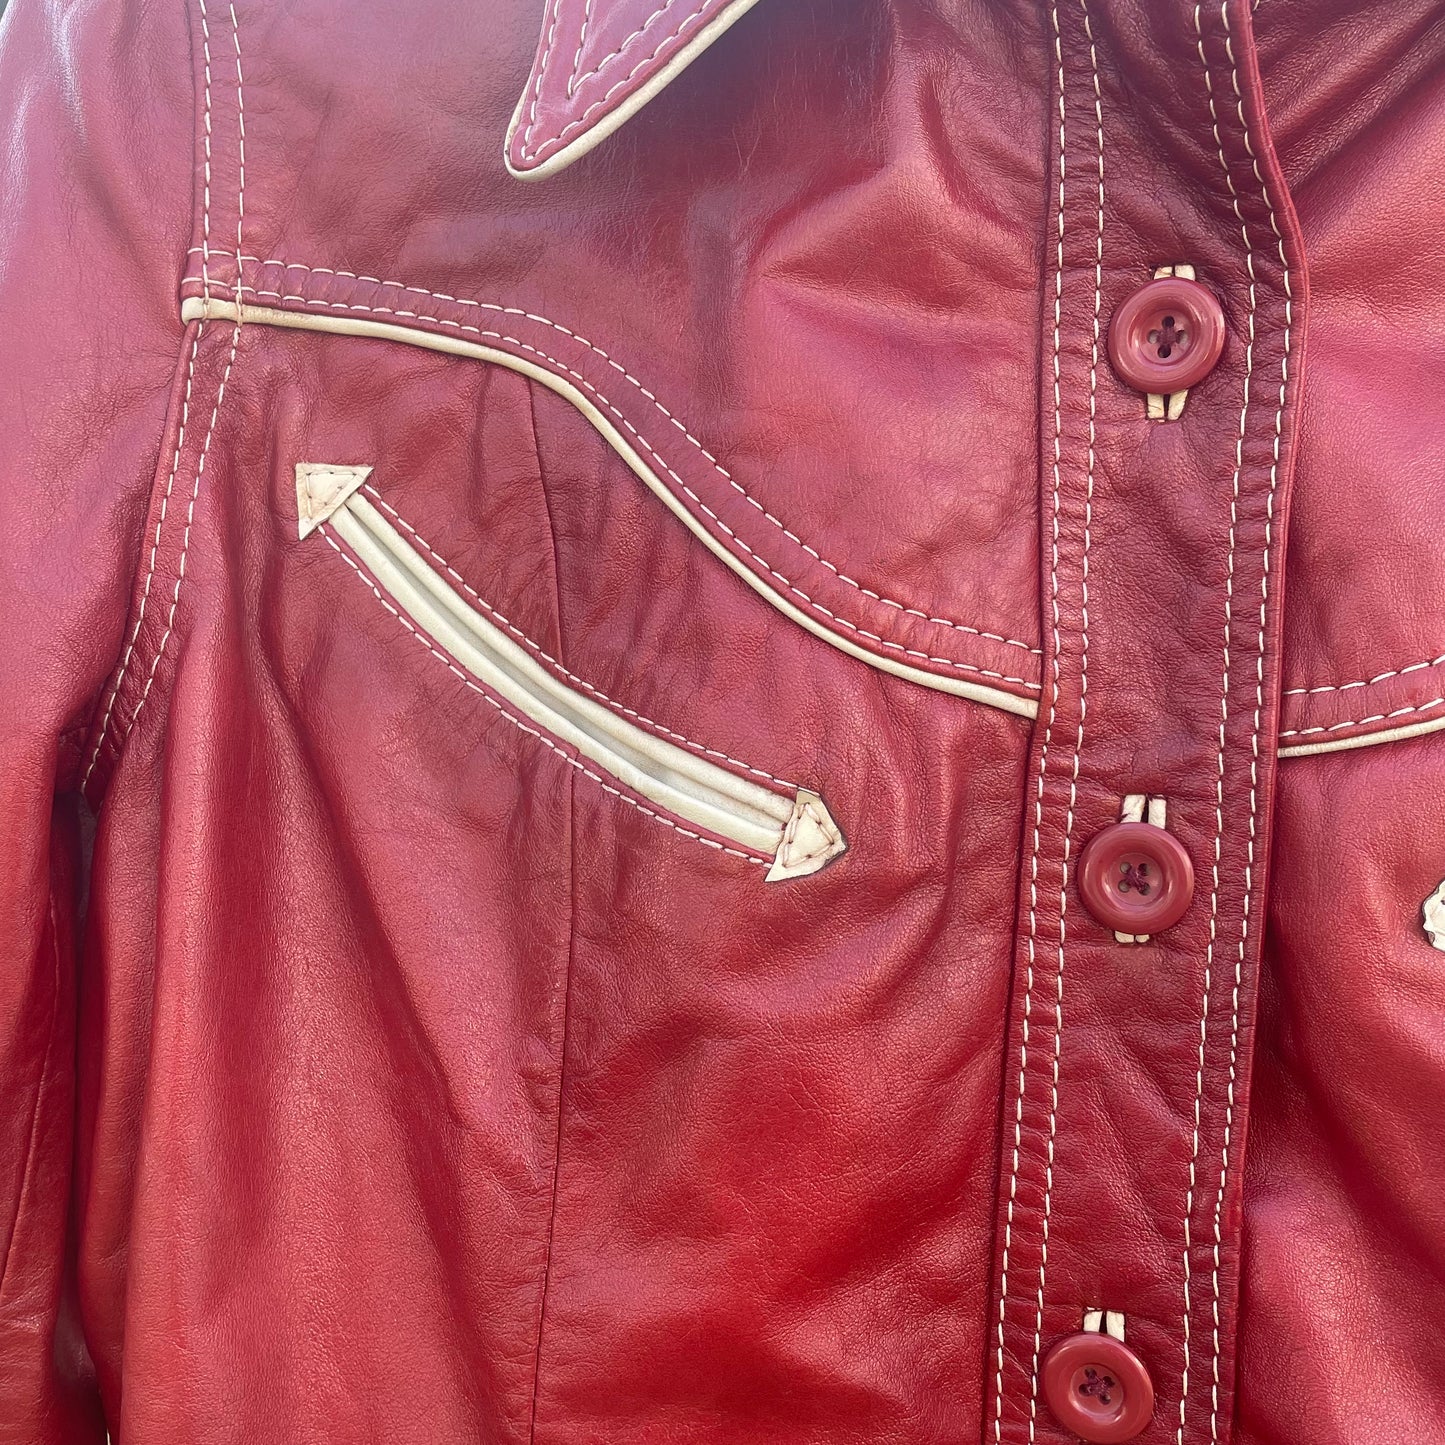 VTG Miss Pioneer Red Leather Western Jacket